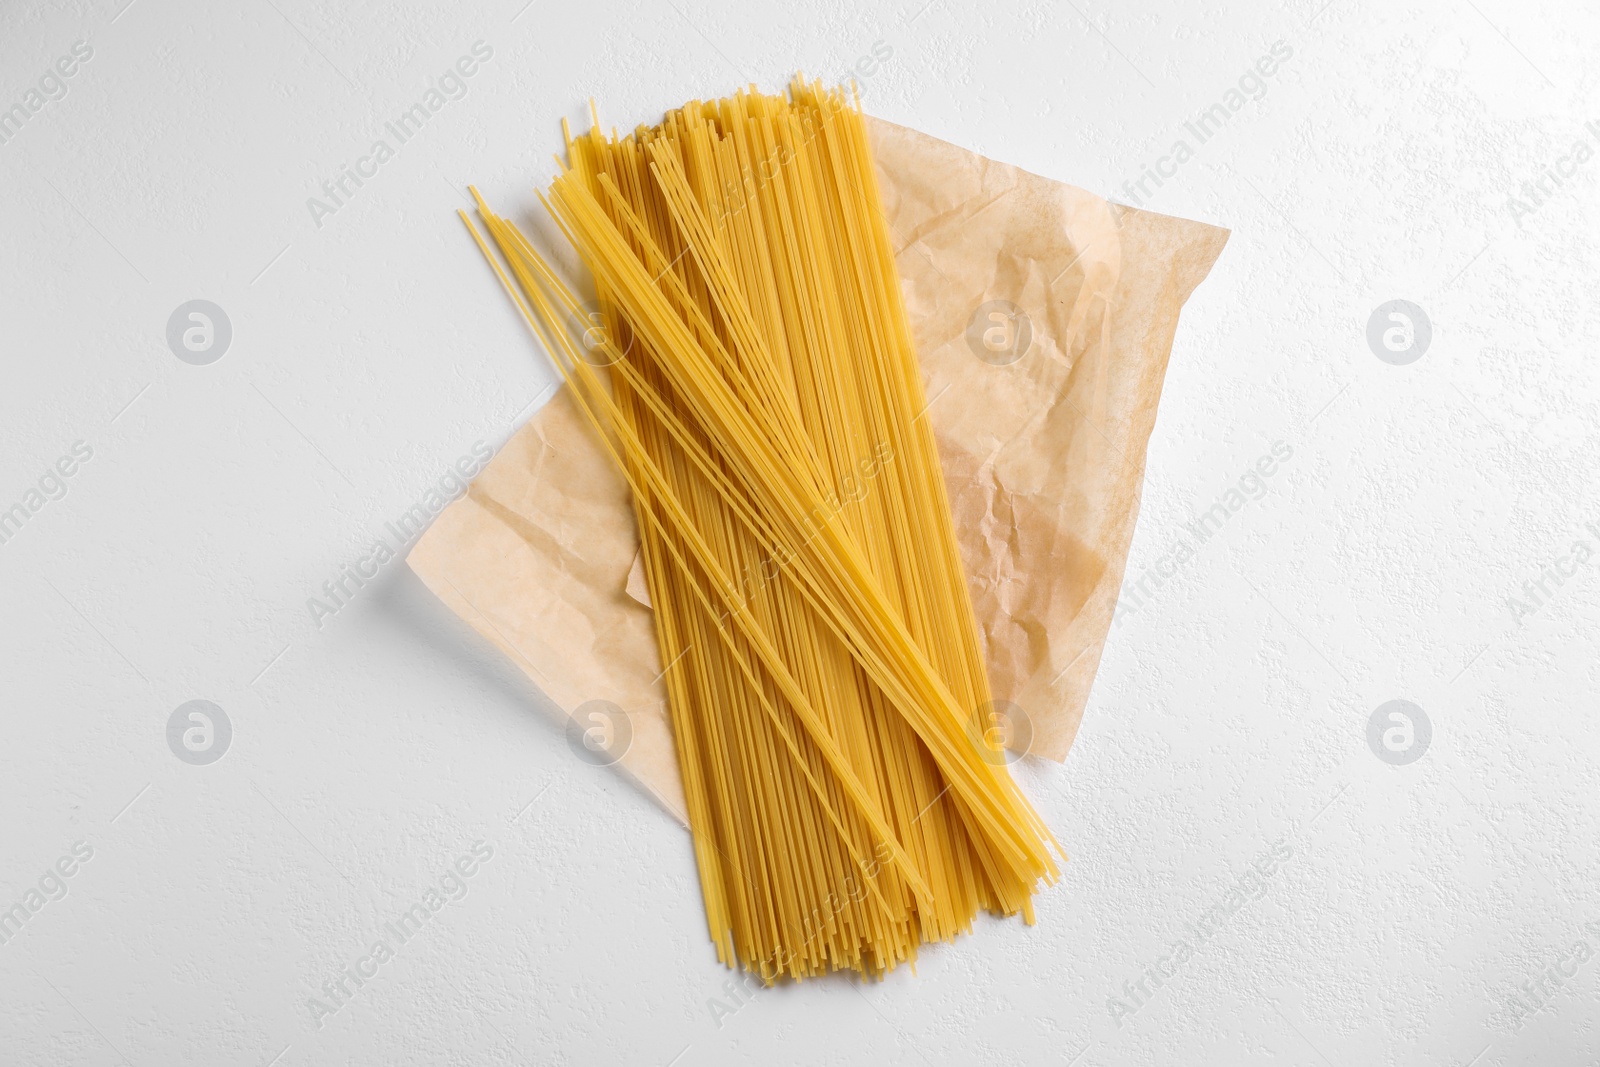 Photo of Uncooked spaghetti on white table, top view. Italian pasta